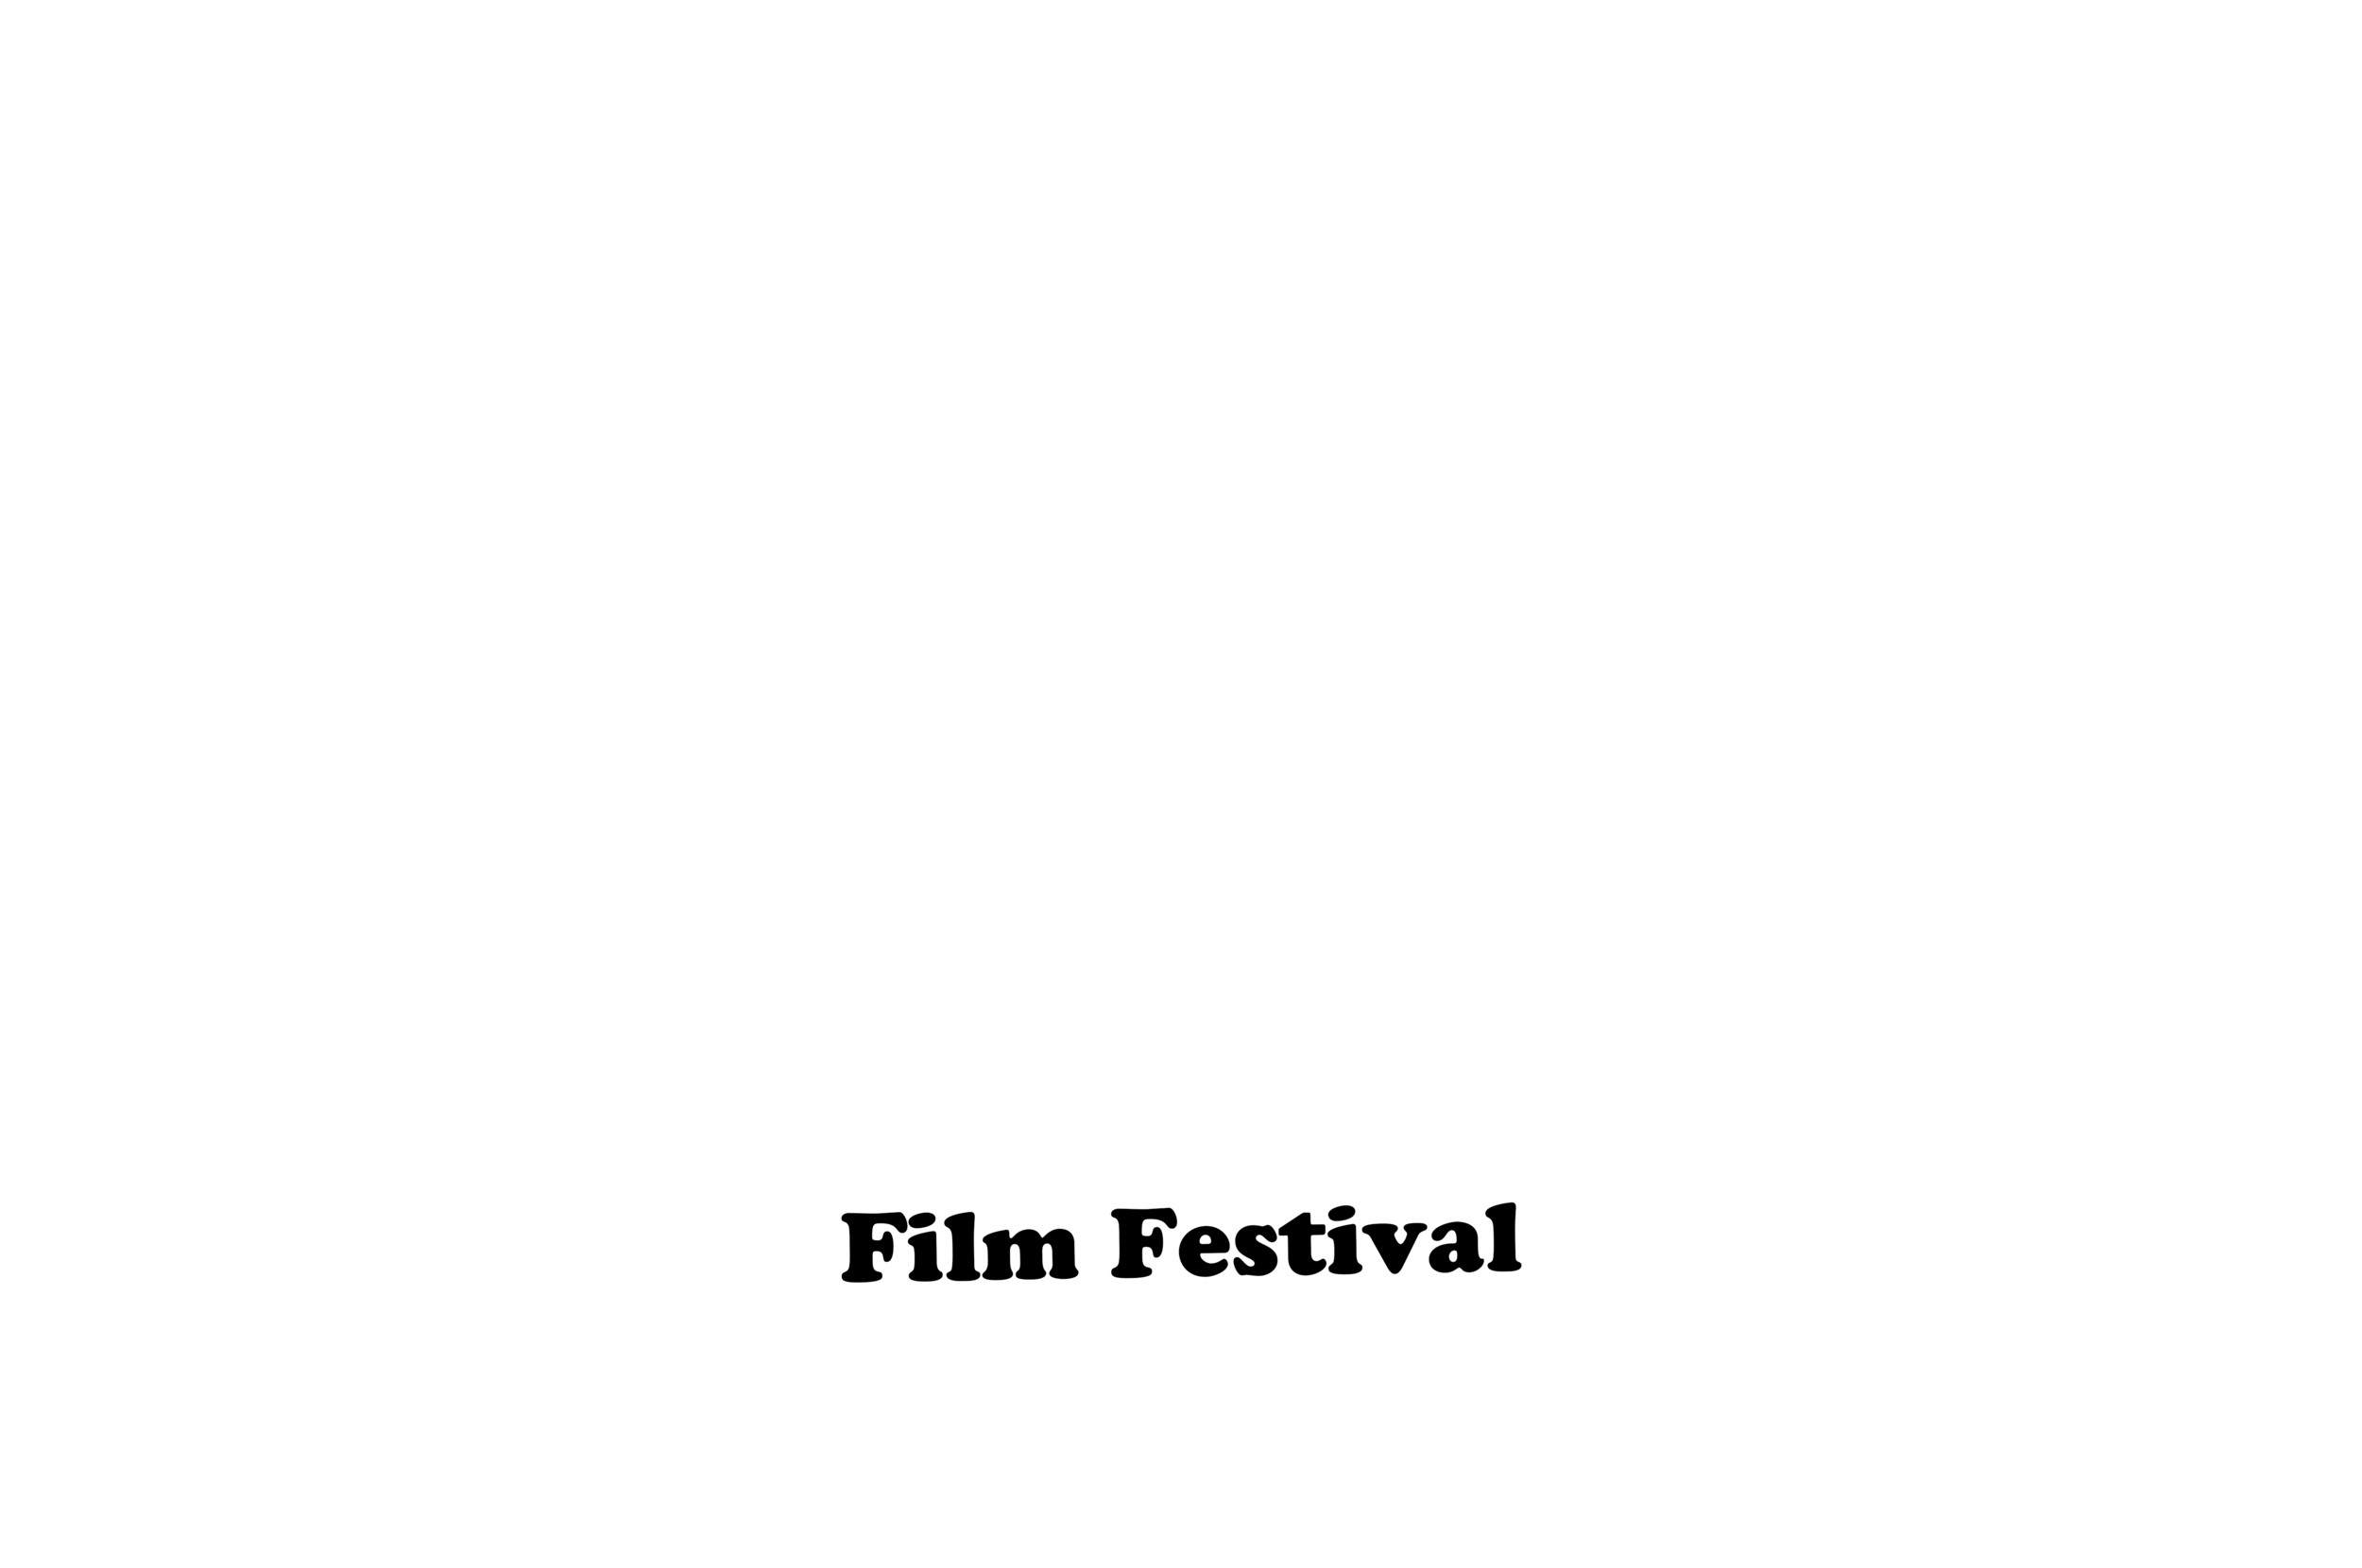 OFFICIALSELECTION-AustinRevolutionFilmFestival-2020 white.png